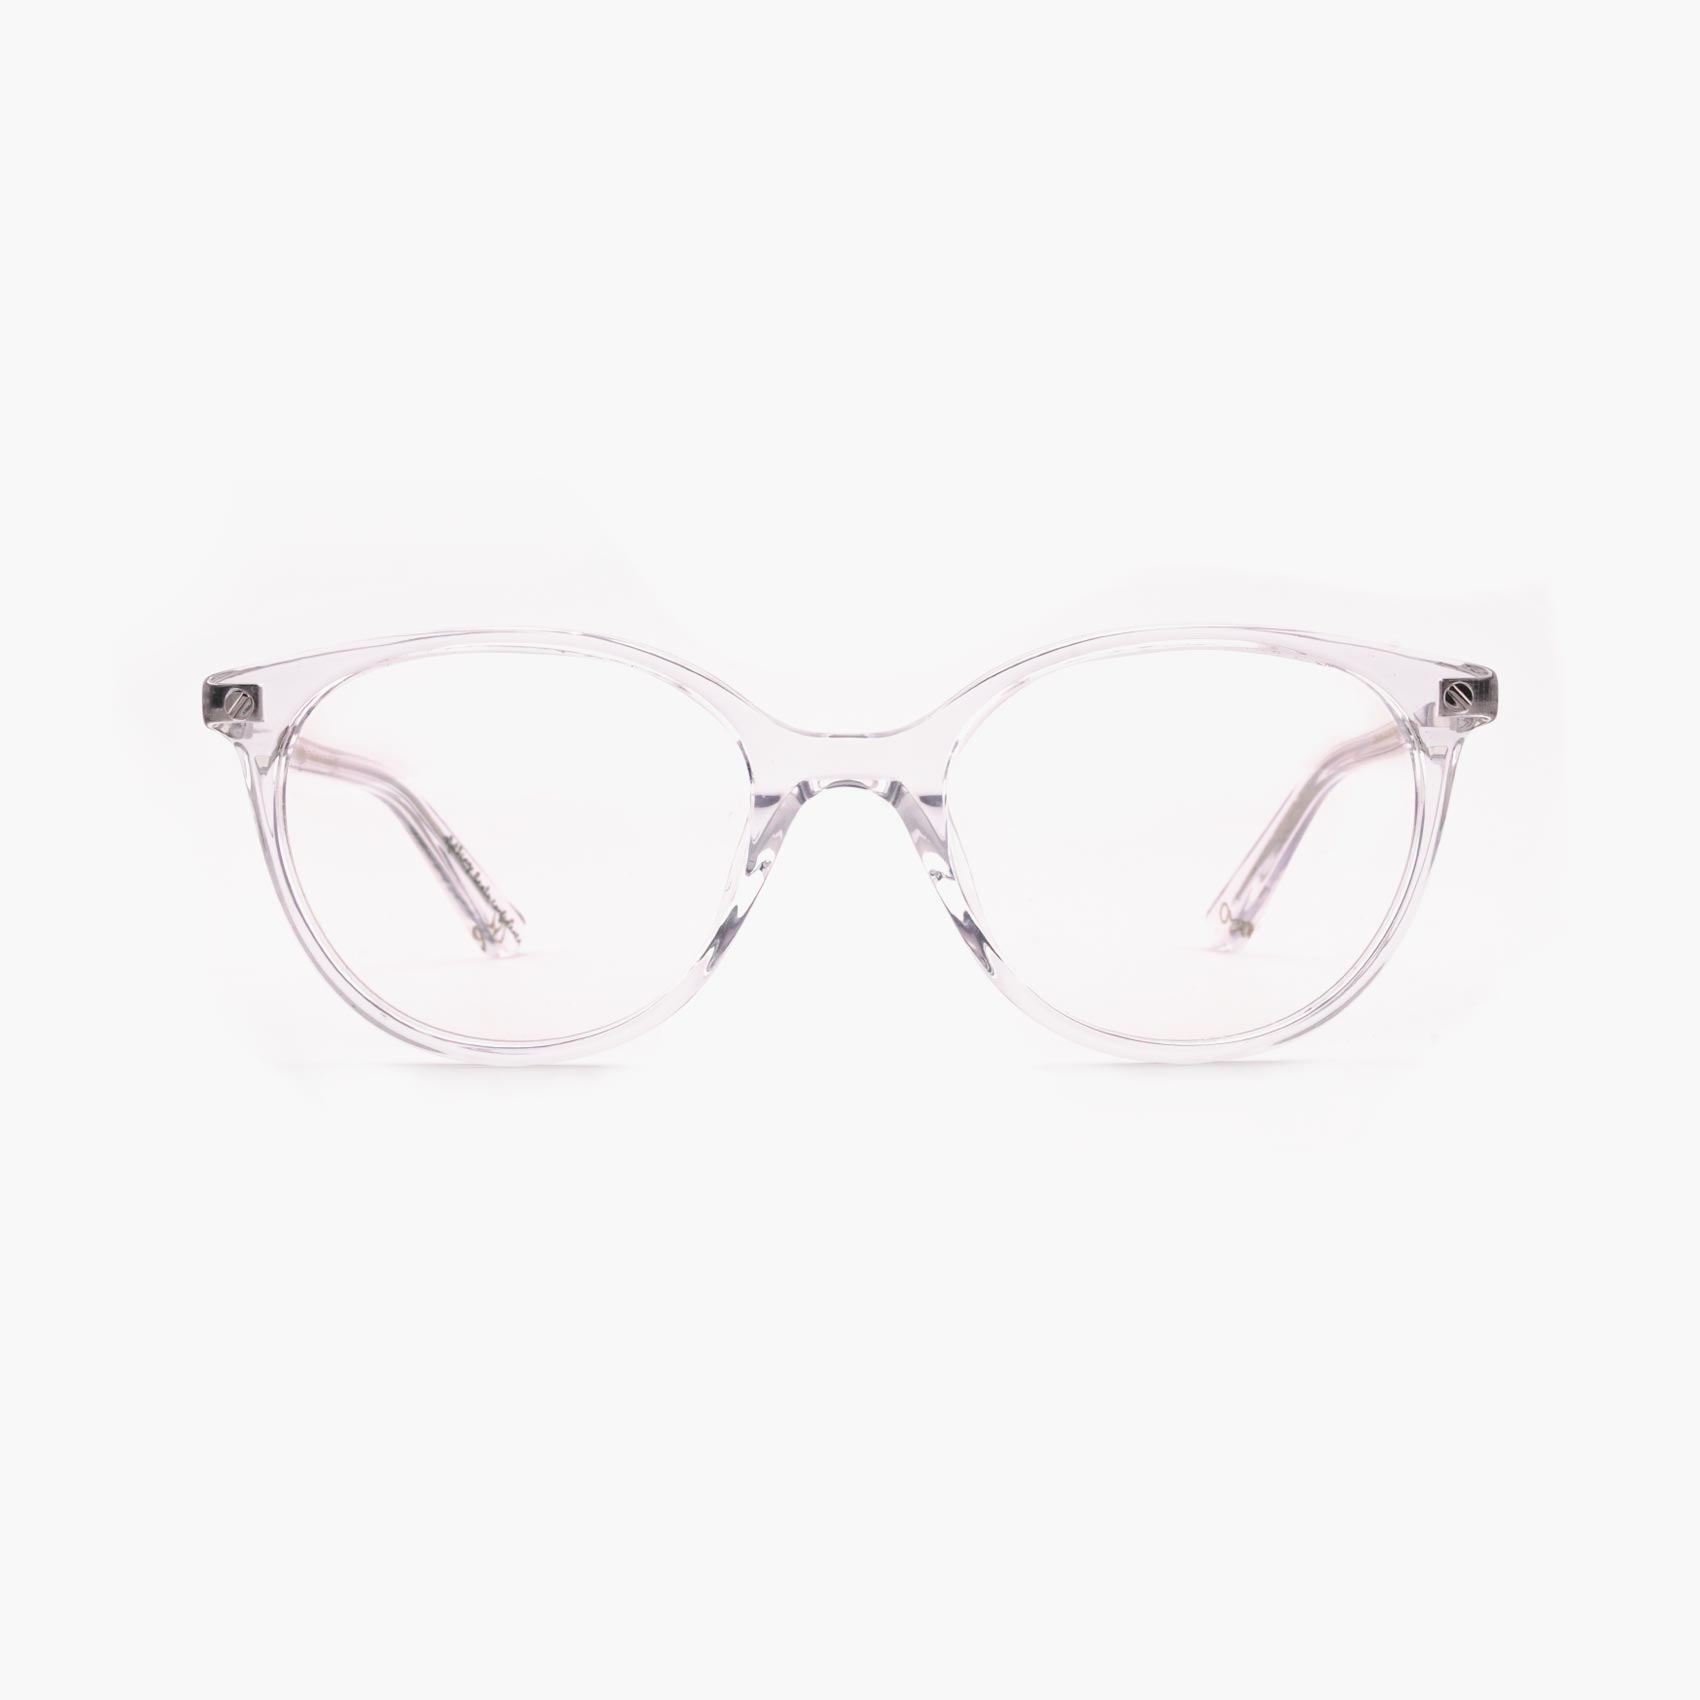 Proud eyewear Charlize C4 F transparent acetate glasses for women